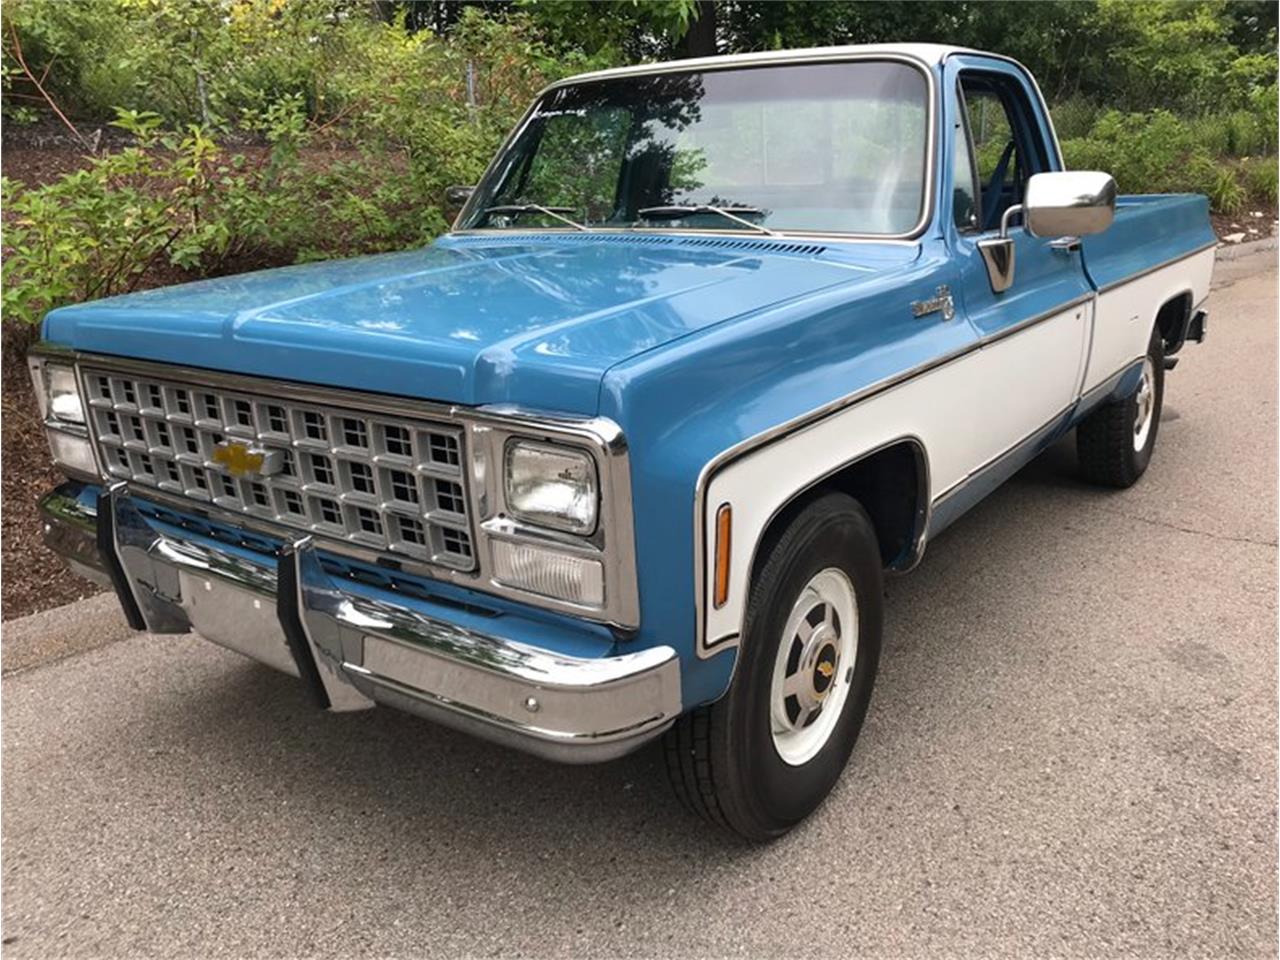 Blue 1980 Chevrolet C/K 20 for sale located in Holliston, Massachusetts - $...